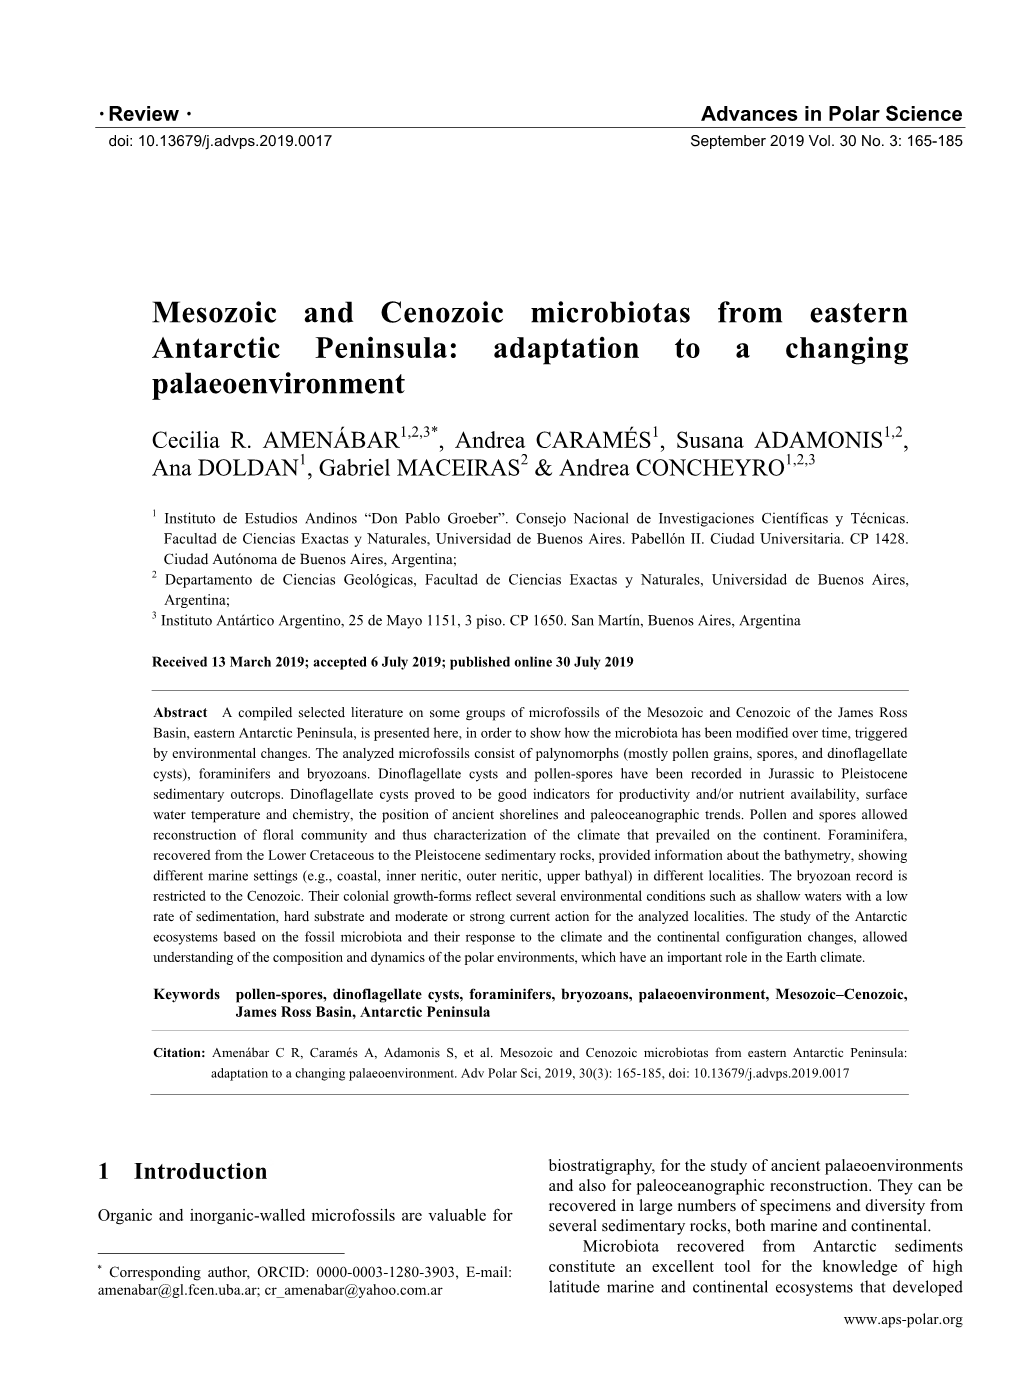 Mesozoic and Cenozoic Microbiotas from Eastern Antarctic Peninsula: Adaptation to a Changing Palaeoenvironment